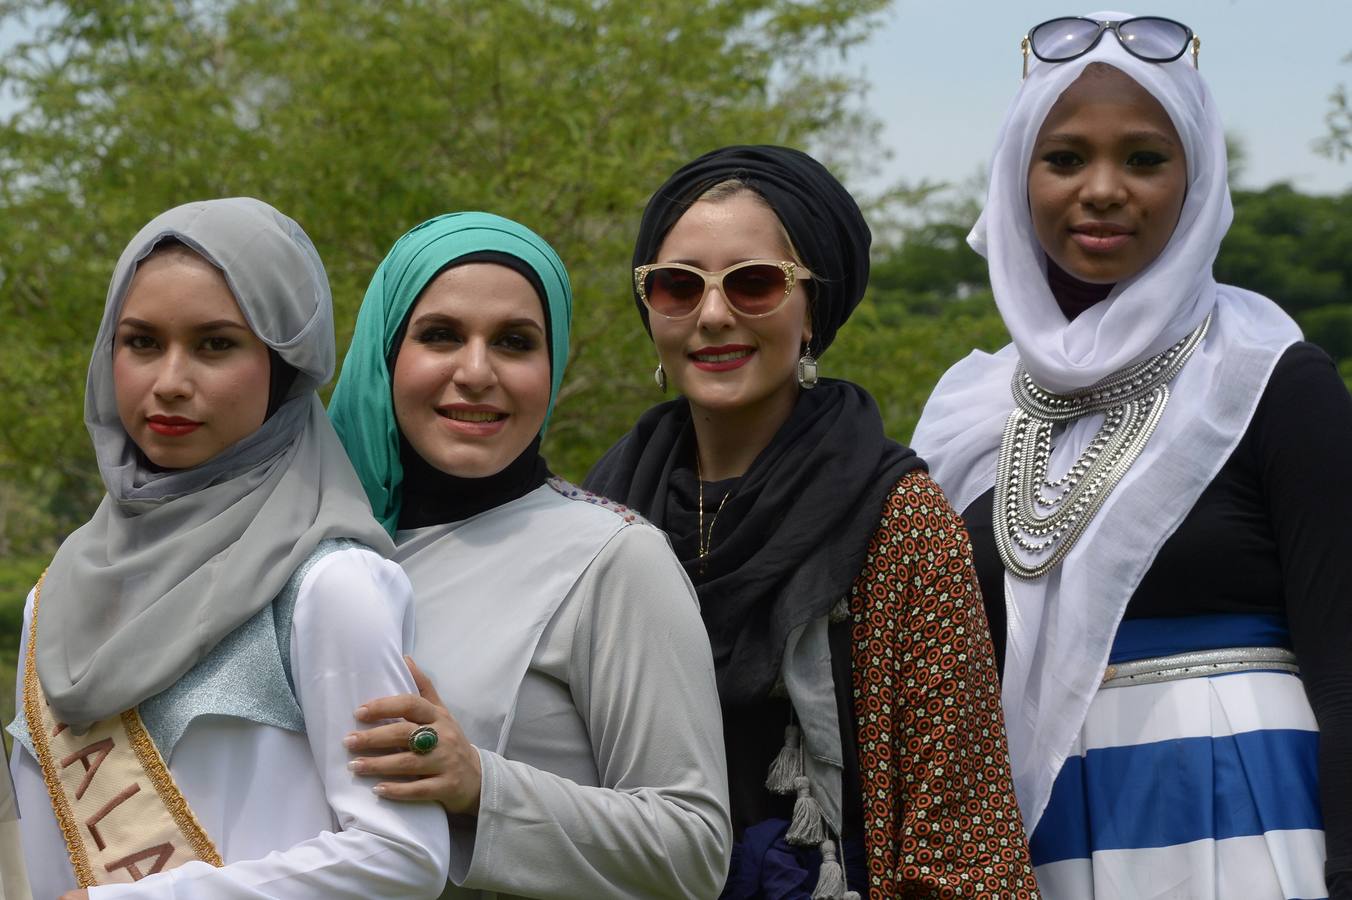  Indonesia  acoge el certamen miss mundo musulm n elcorreo com